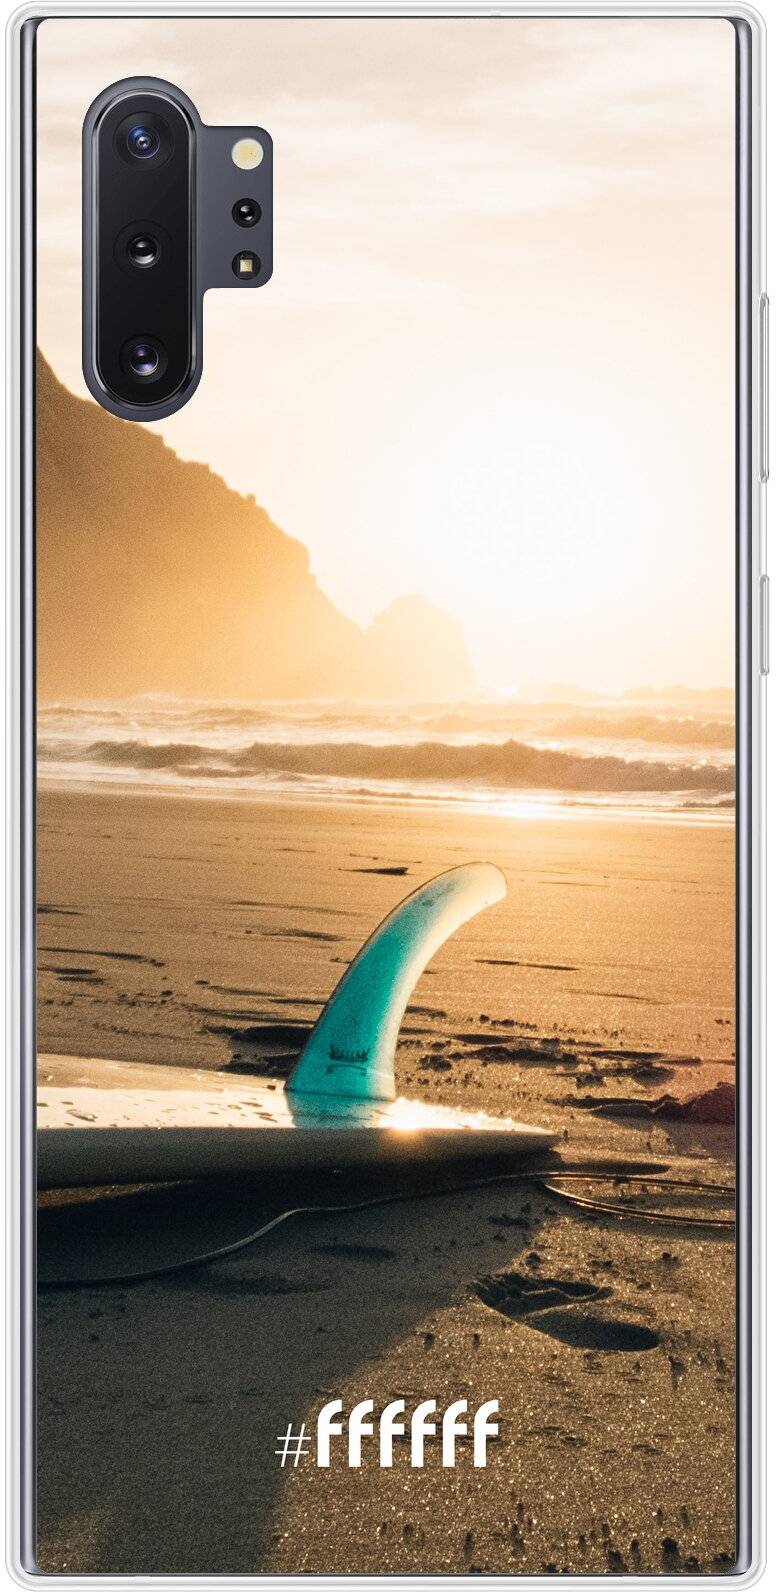 Sunset Surf Galaxy Note 10 Plus